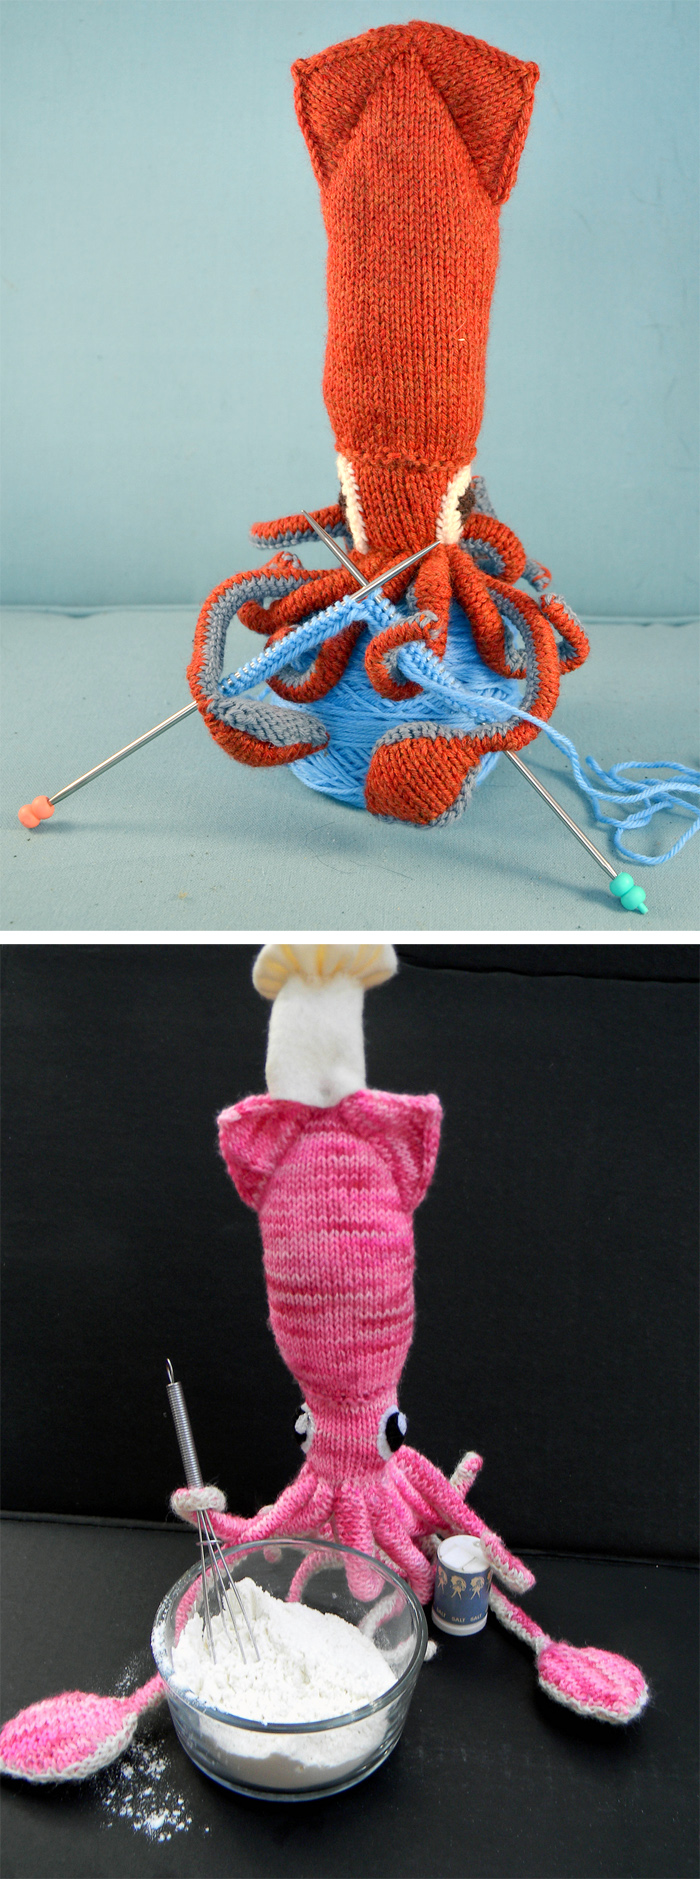 Knitting Pattern for Kraken Amigurumi